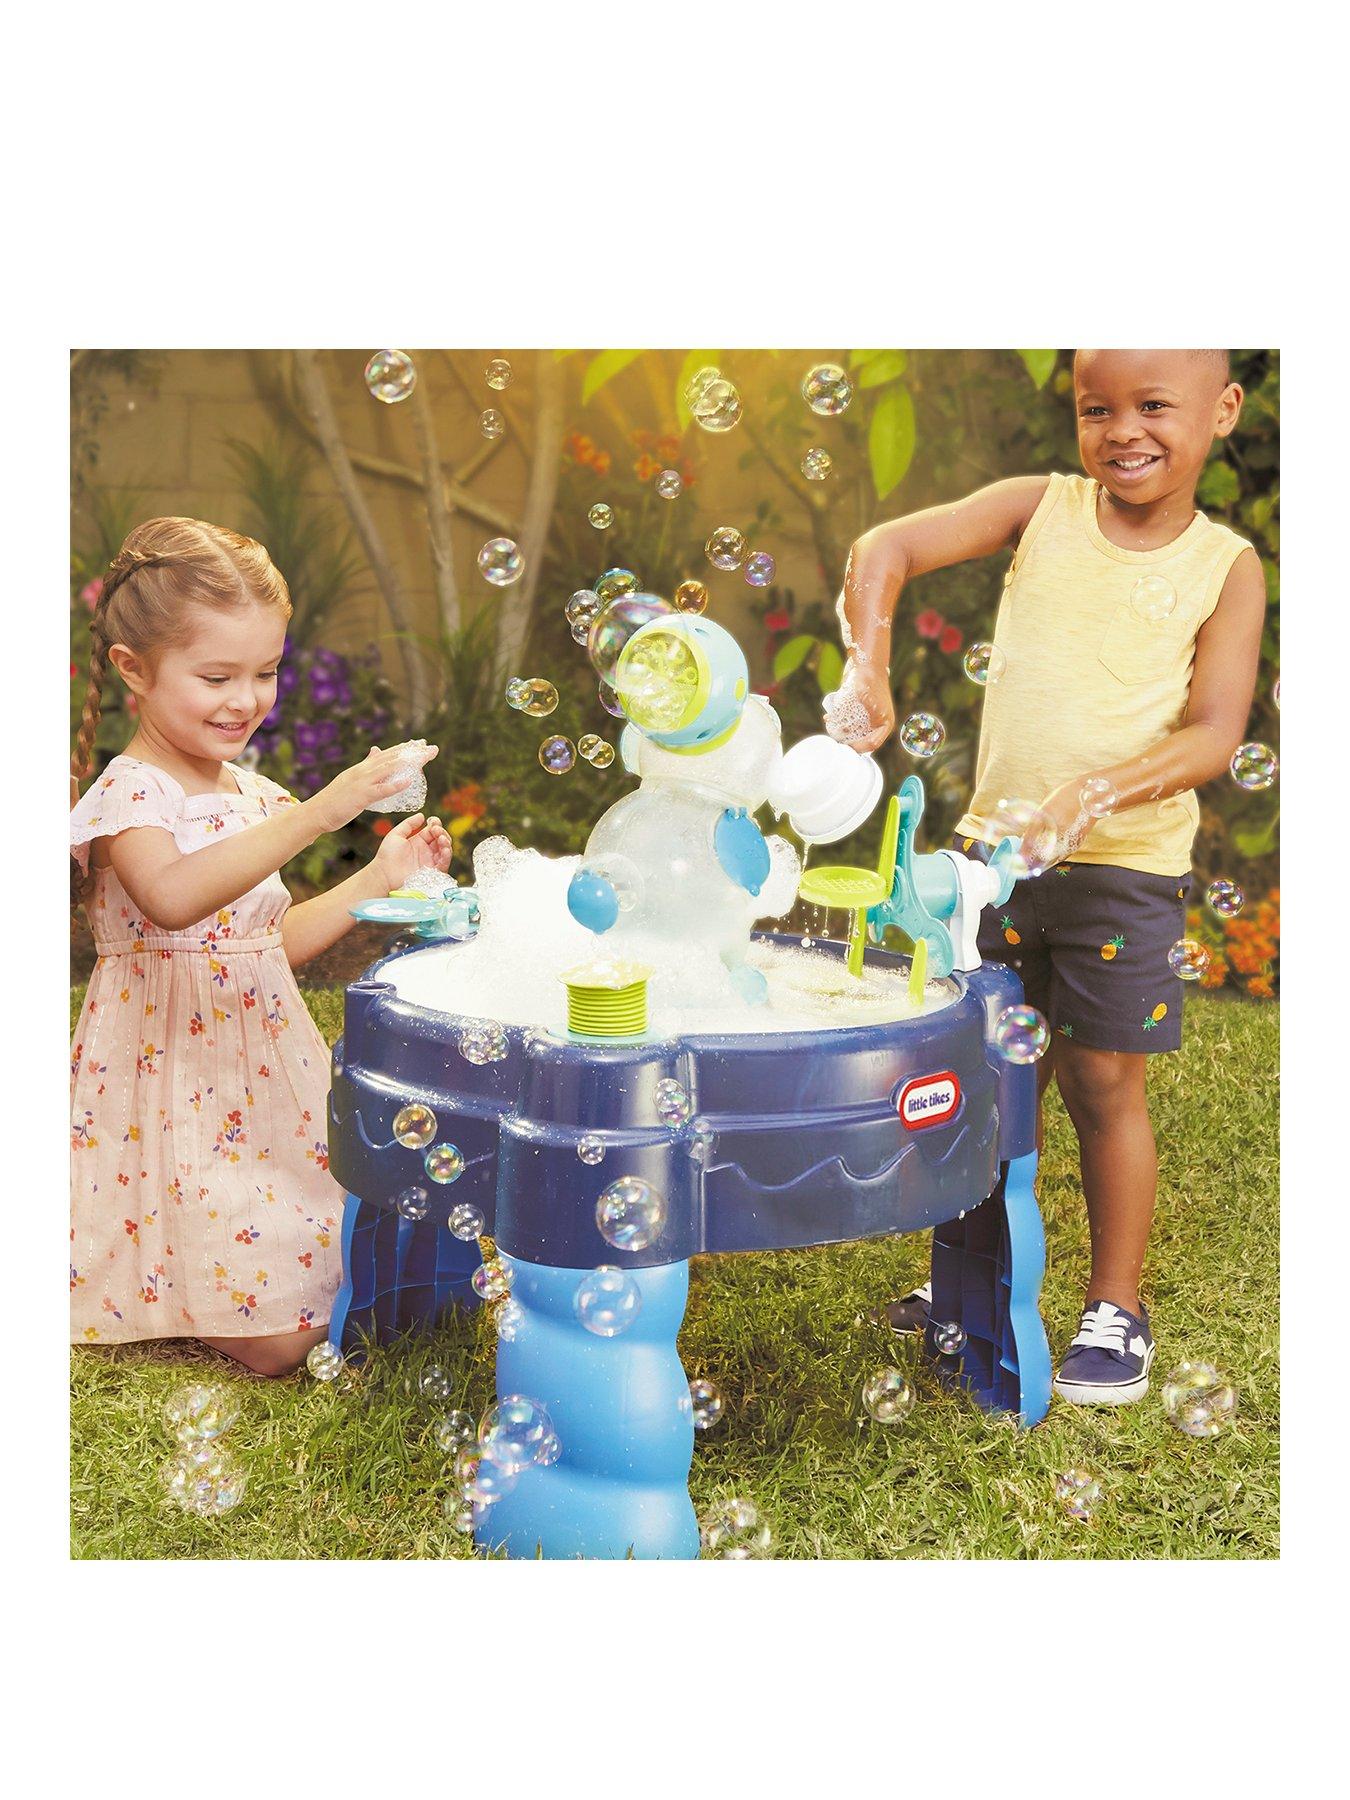 Kids Waterproof Digital Blue SOKY Outdoor Toys for 6-15 Year Old Teen Boys 